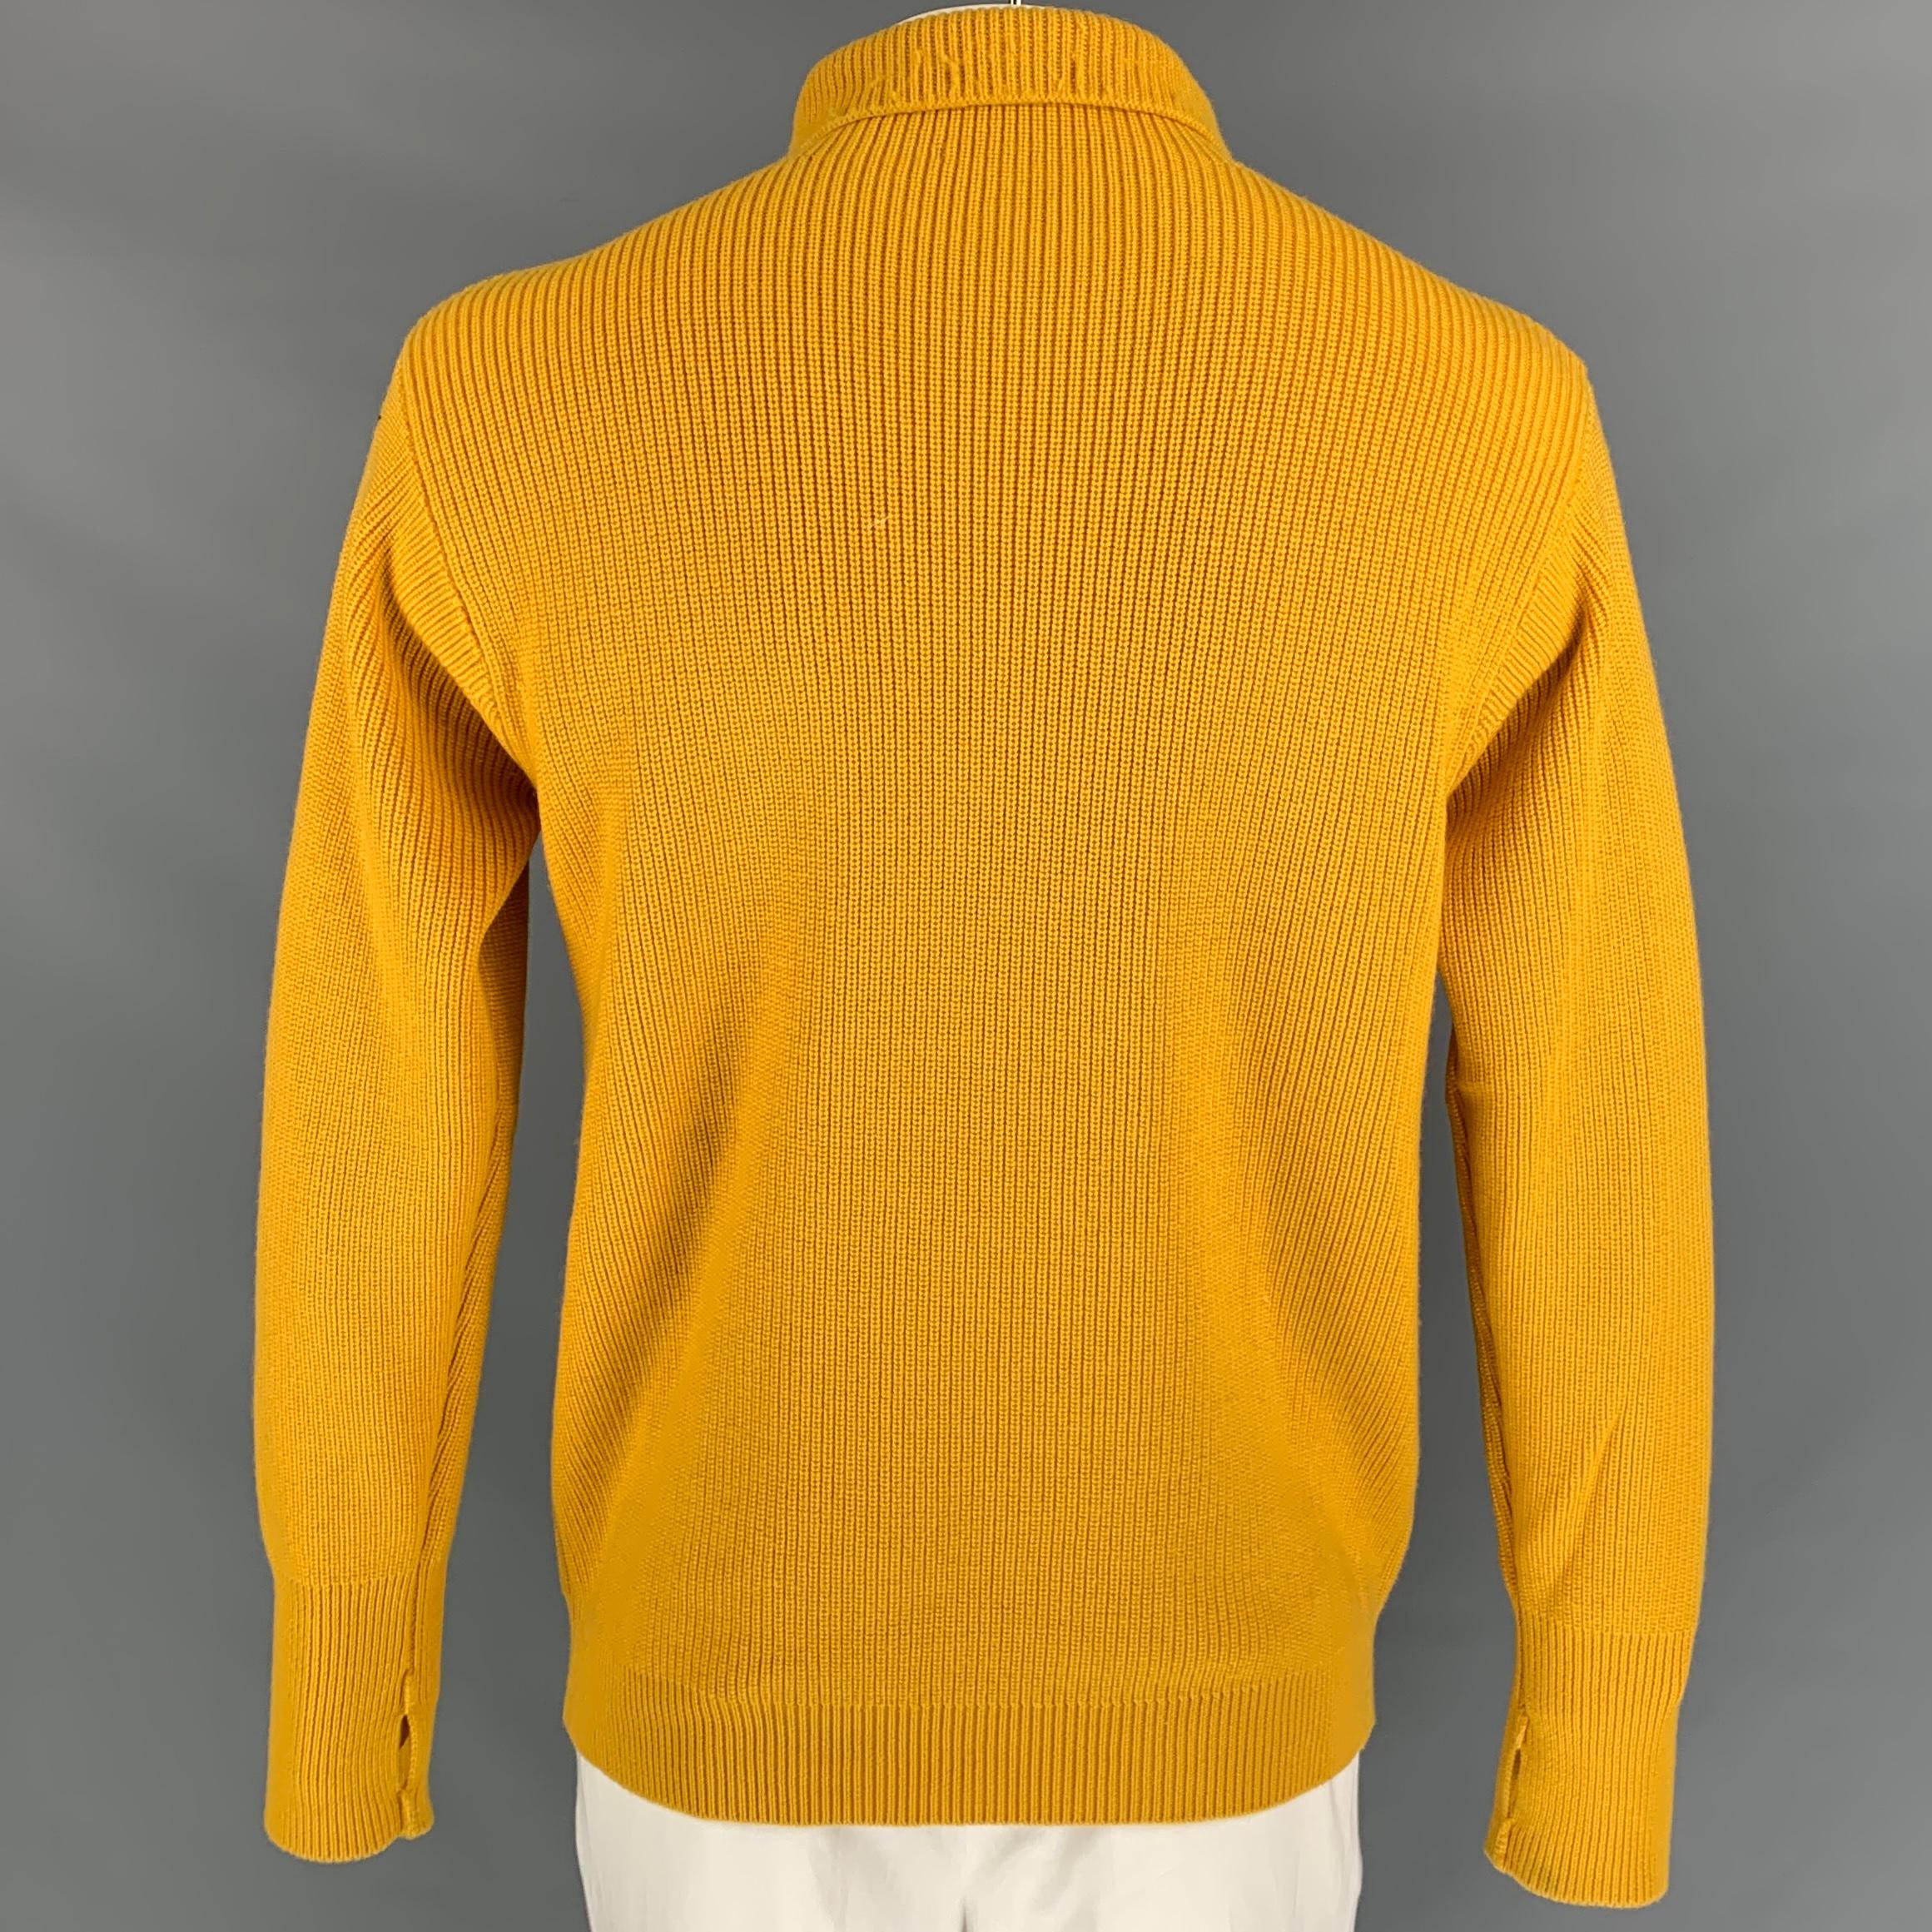 yellow turtleneck sweater